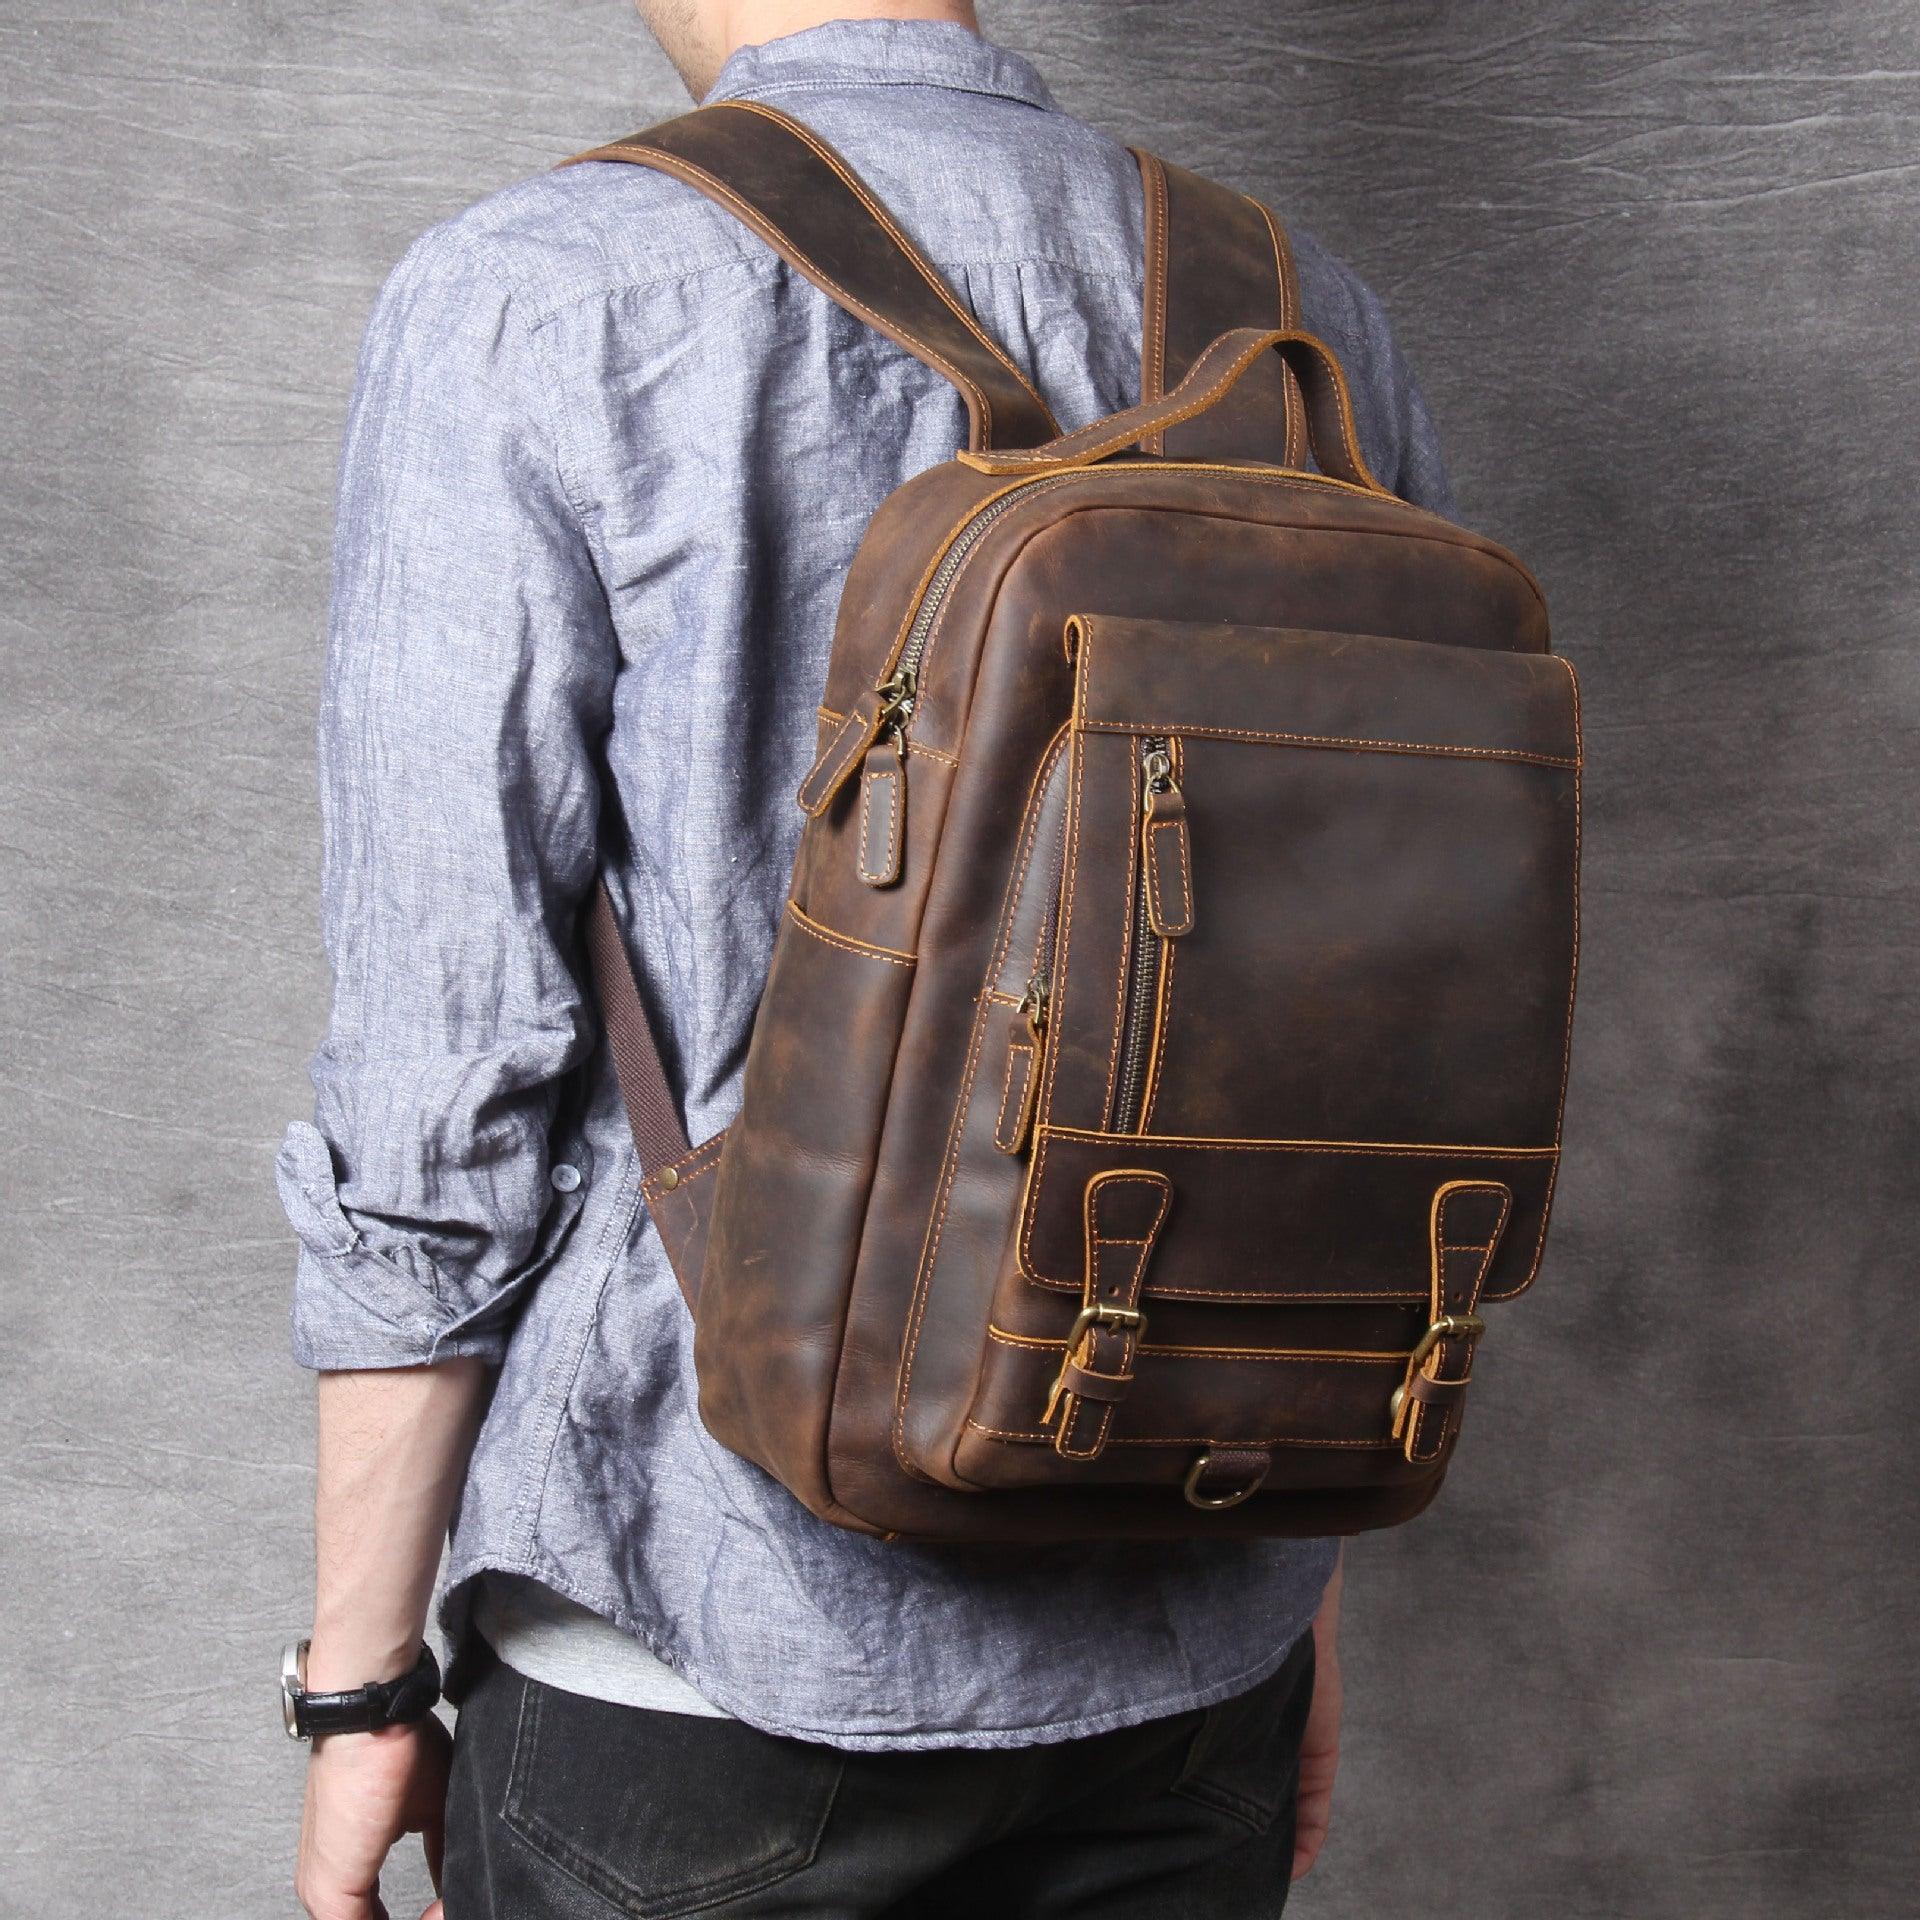 brown leather backpack for men - Woosir